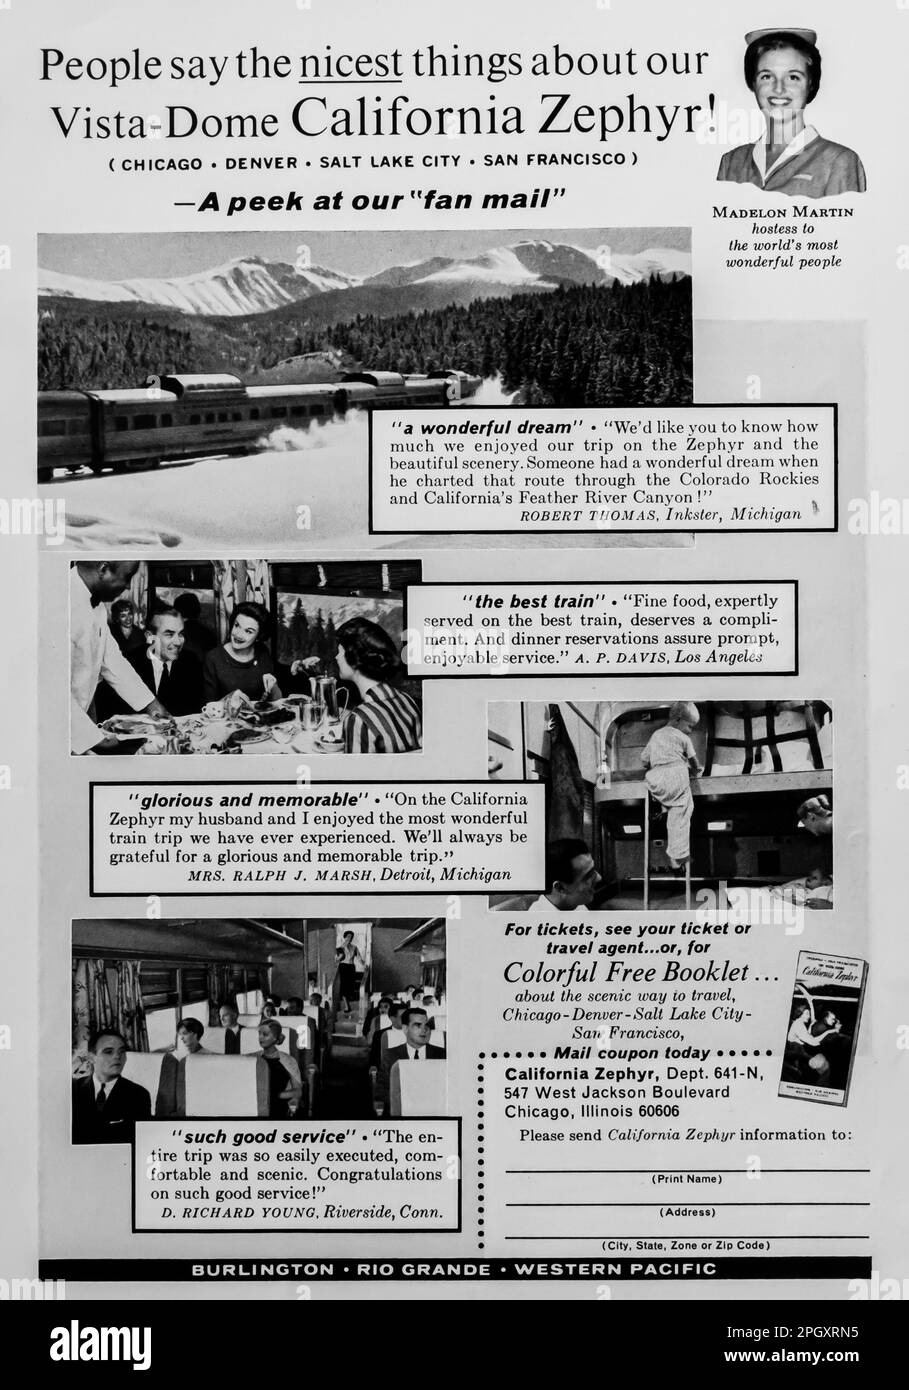 Vista-dome California Zephyr - Western Pacific advert in a Natgeo magazine, February 1964 Stock Photo